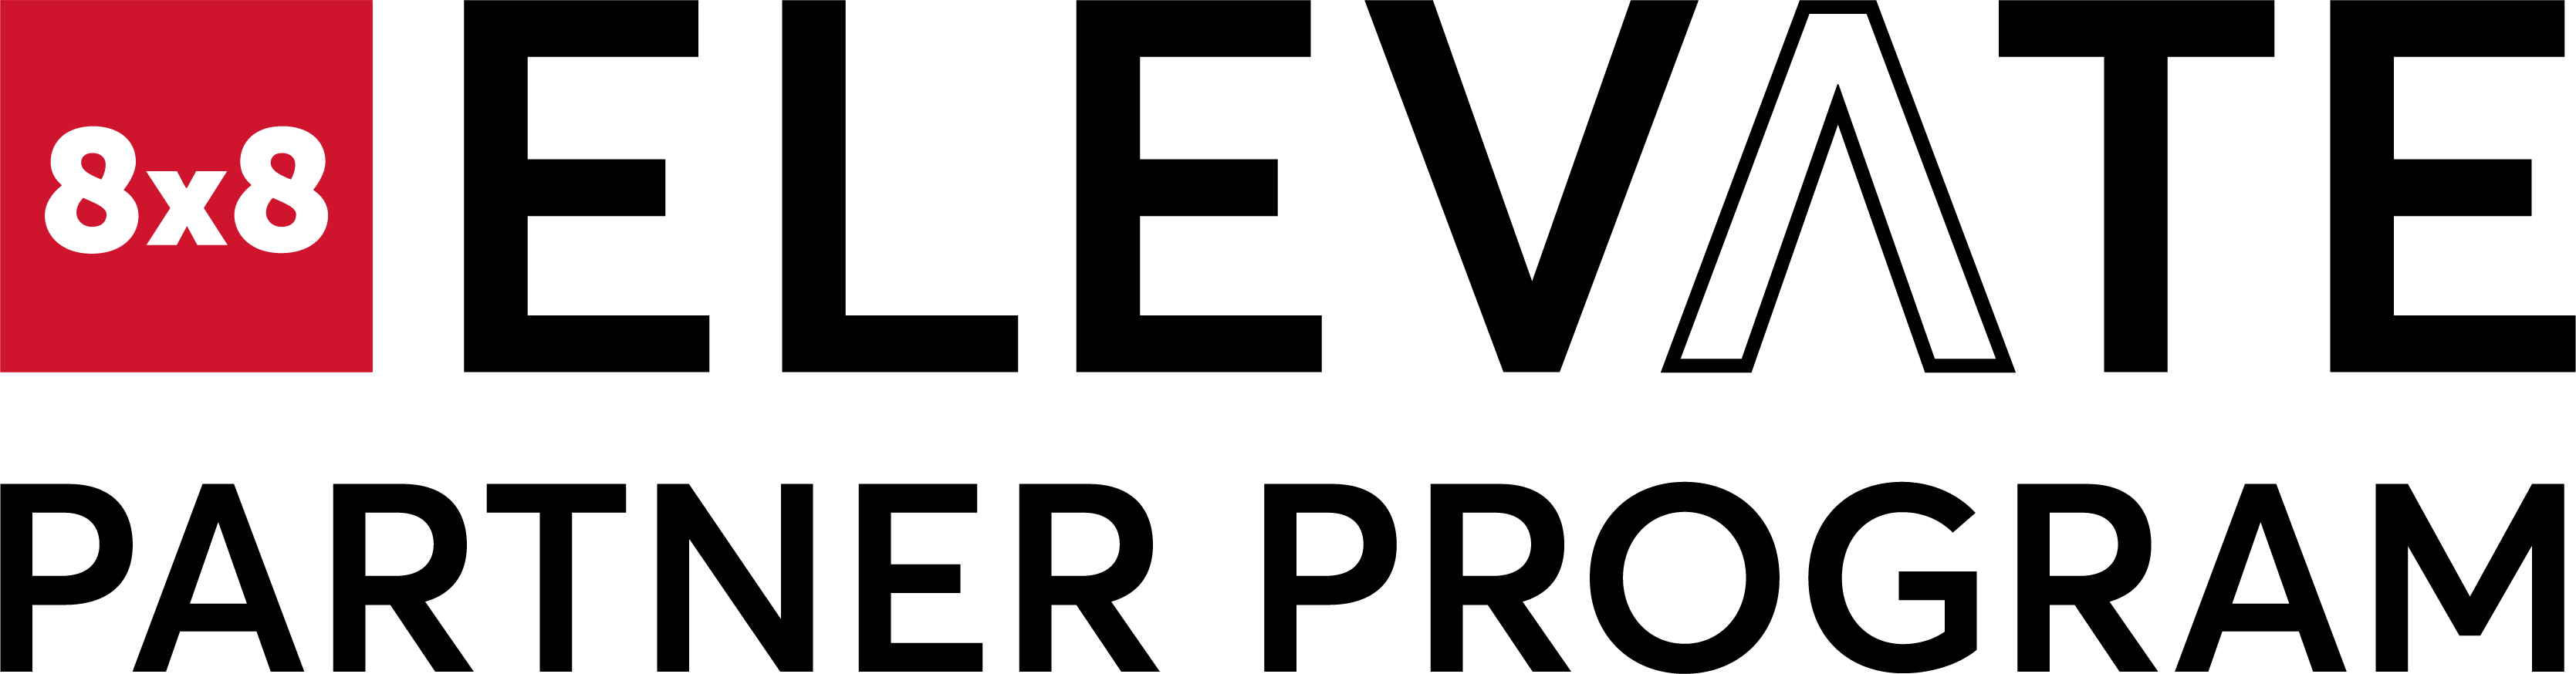 8x8 Elevate Partner Program Logo Red Black